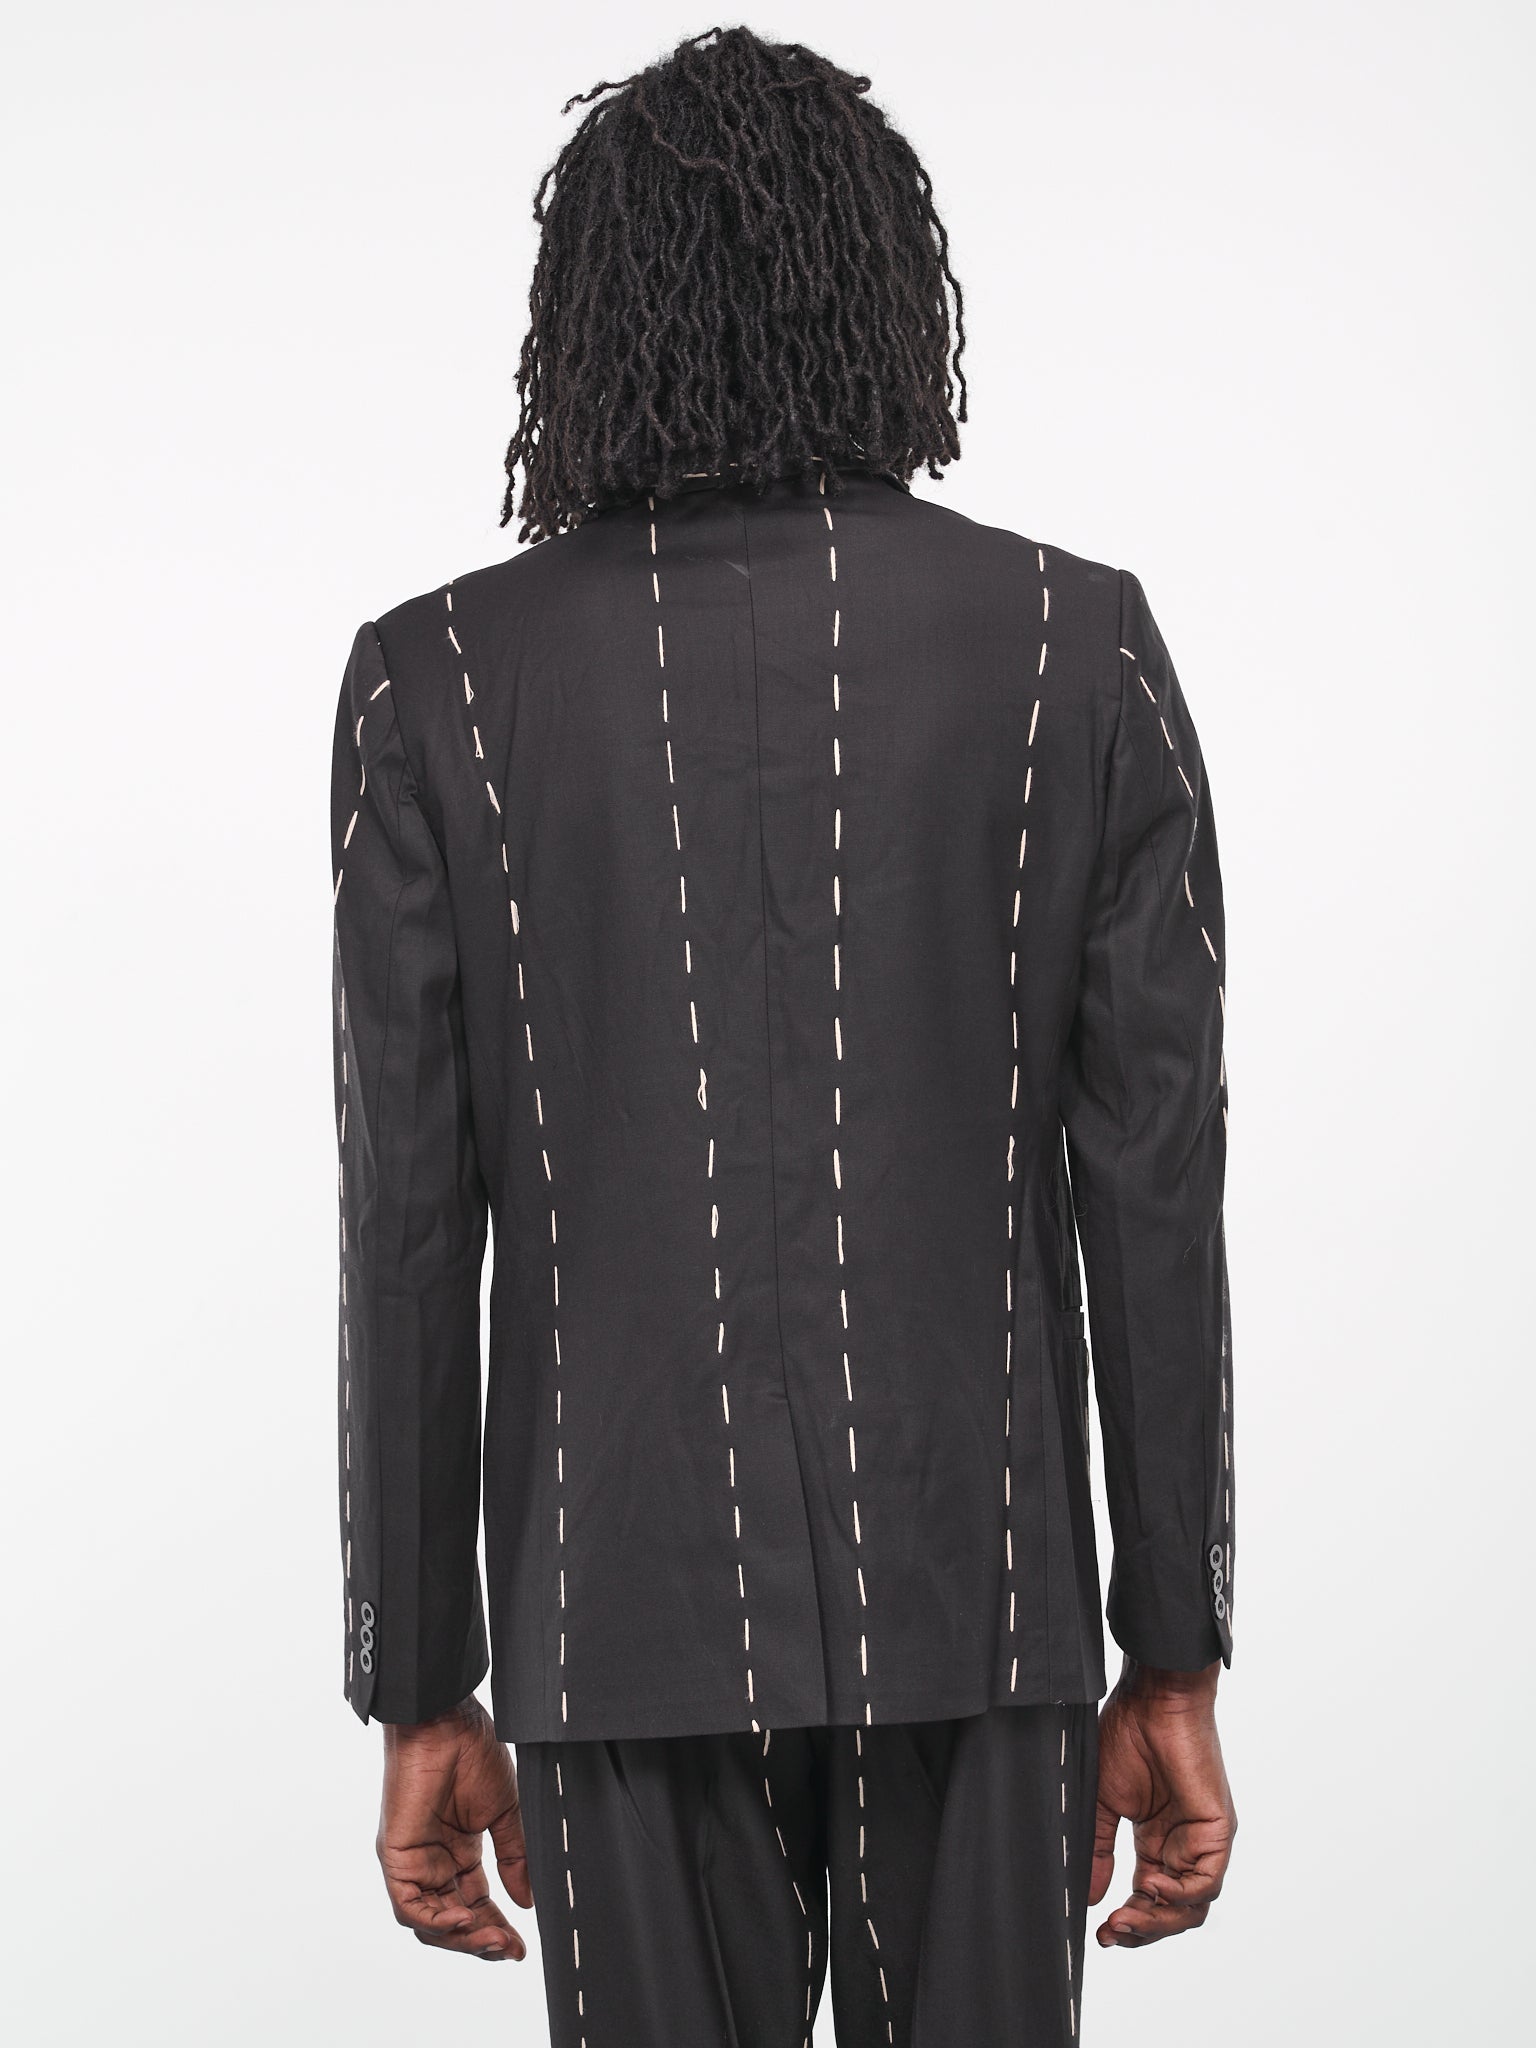 Embroidered Suit Jacket (SUT-3-BLACK)